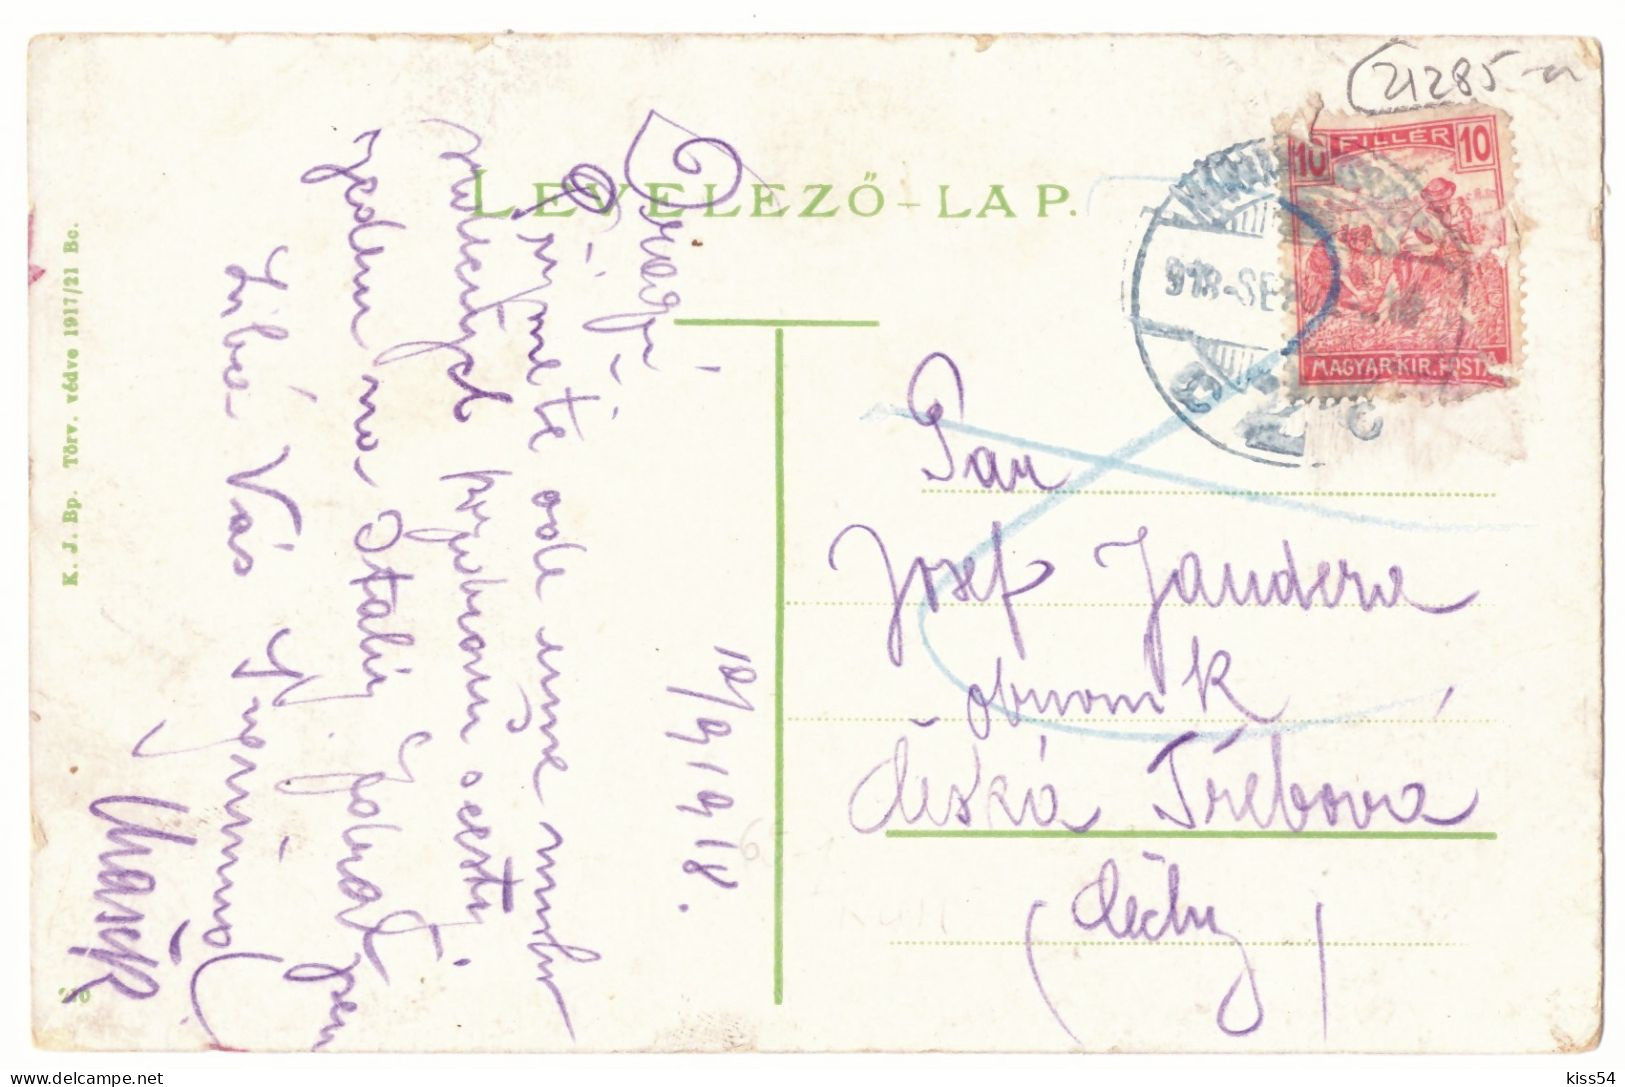 RO 86 - 21285 SIGHET, Maramures, Market, Romania - Old Postcard - Used - 1918 - Romania